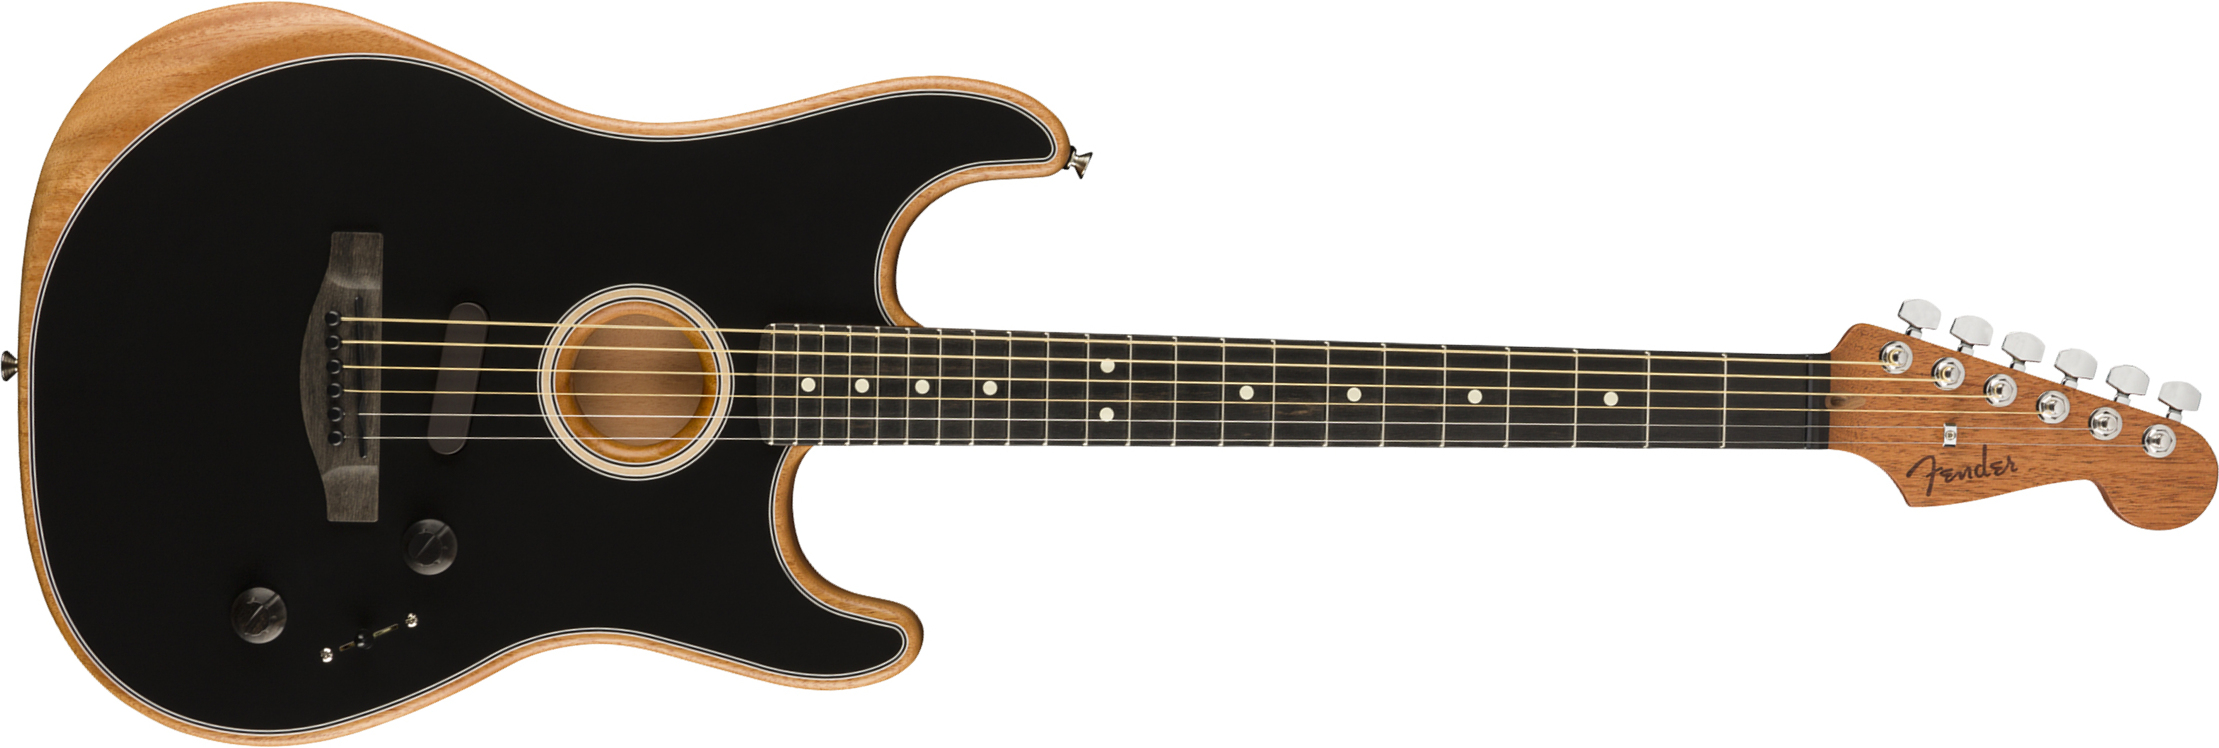 Fender Strat American Acoustasonic Usa Eb - Black - Electro acoustic guitar - Main picture